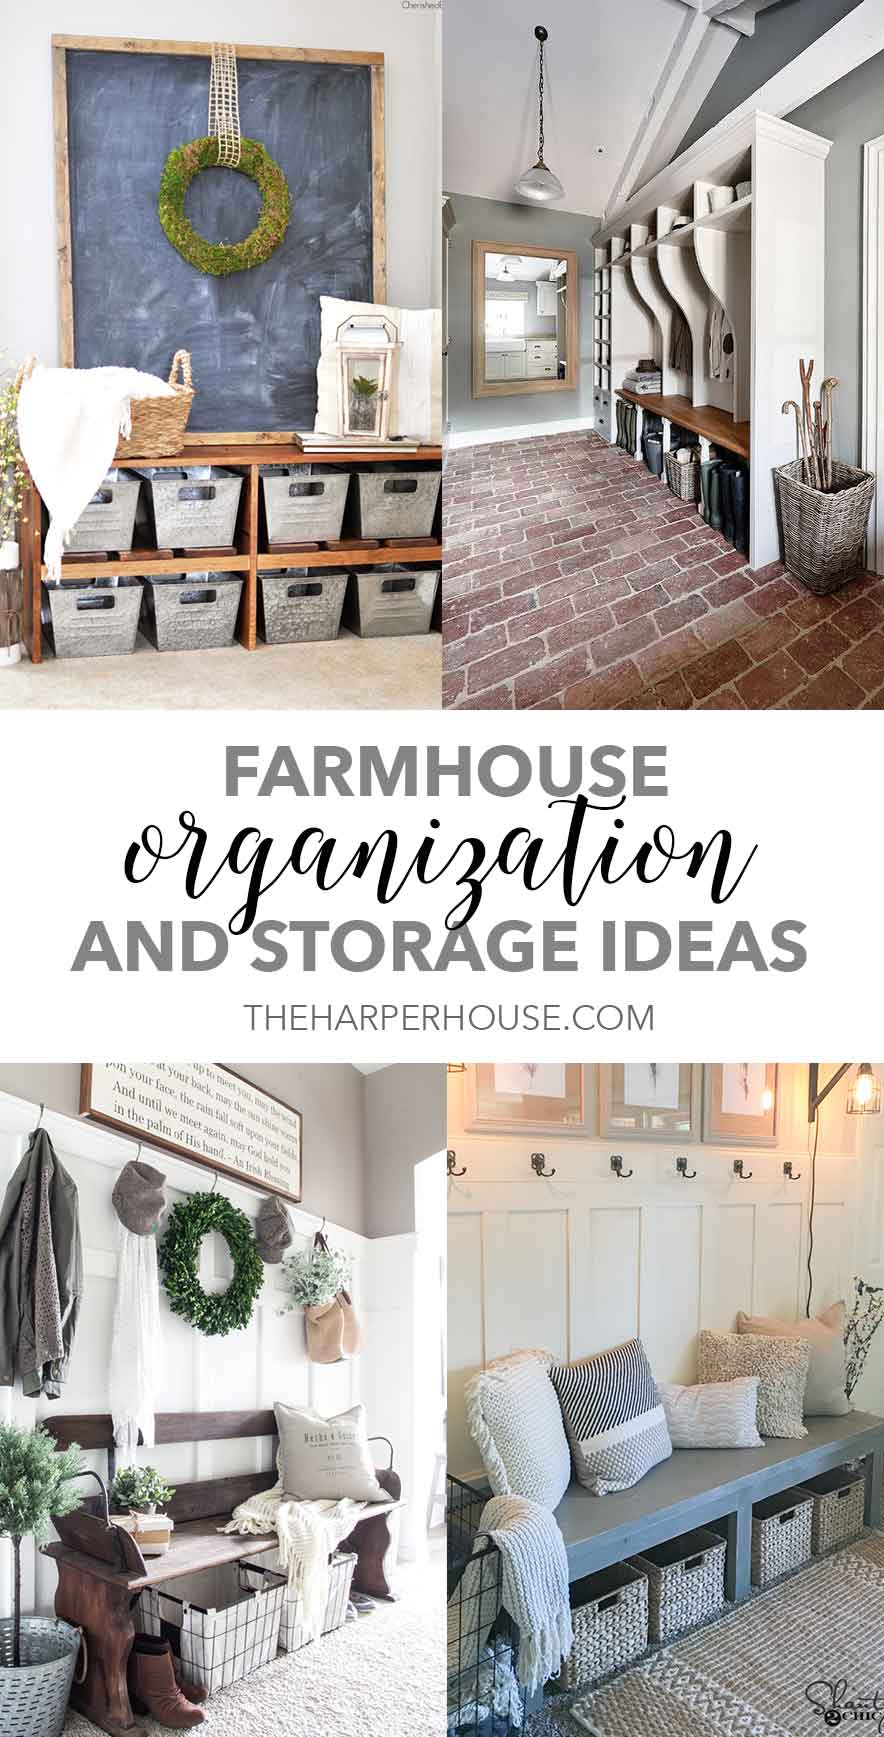 https://www.theharperhouse.com/wp-content/uploads/2017/07/farmhouse-organization-storage-ideas-title.jpg